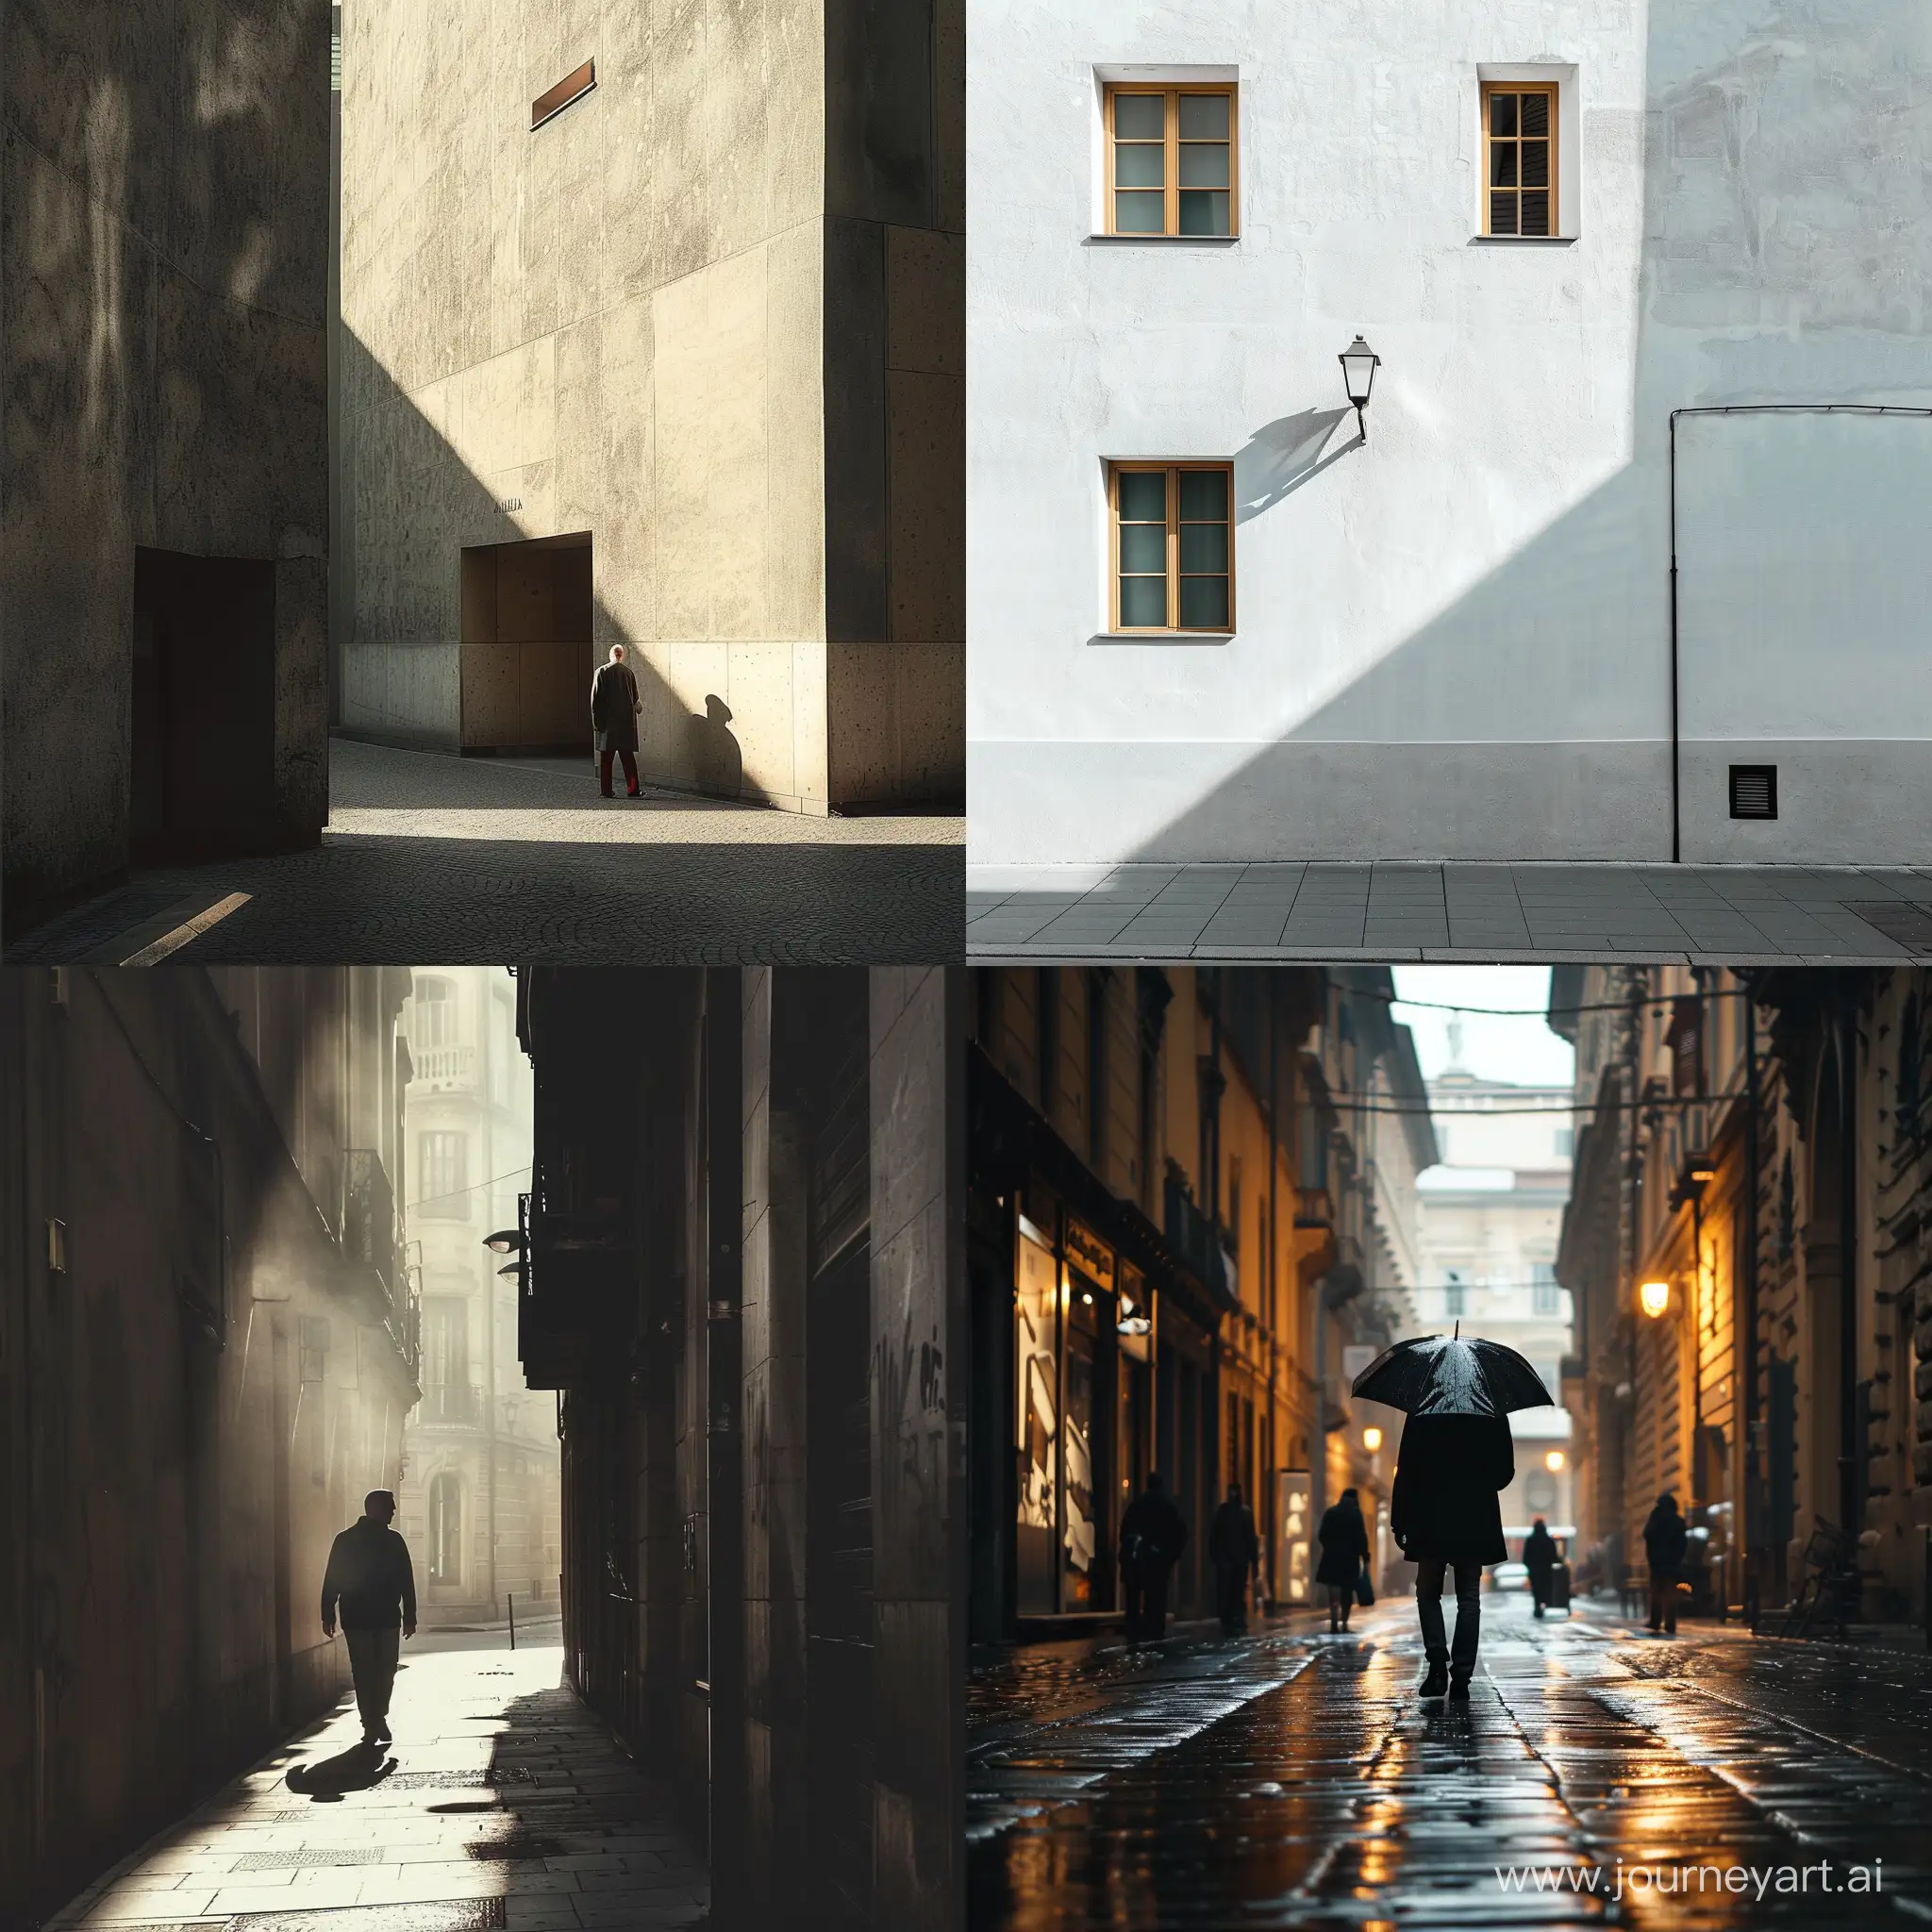 A realistic street photography style minimalista